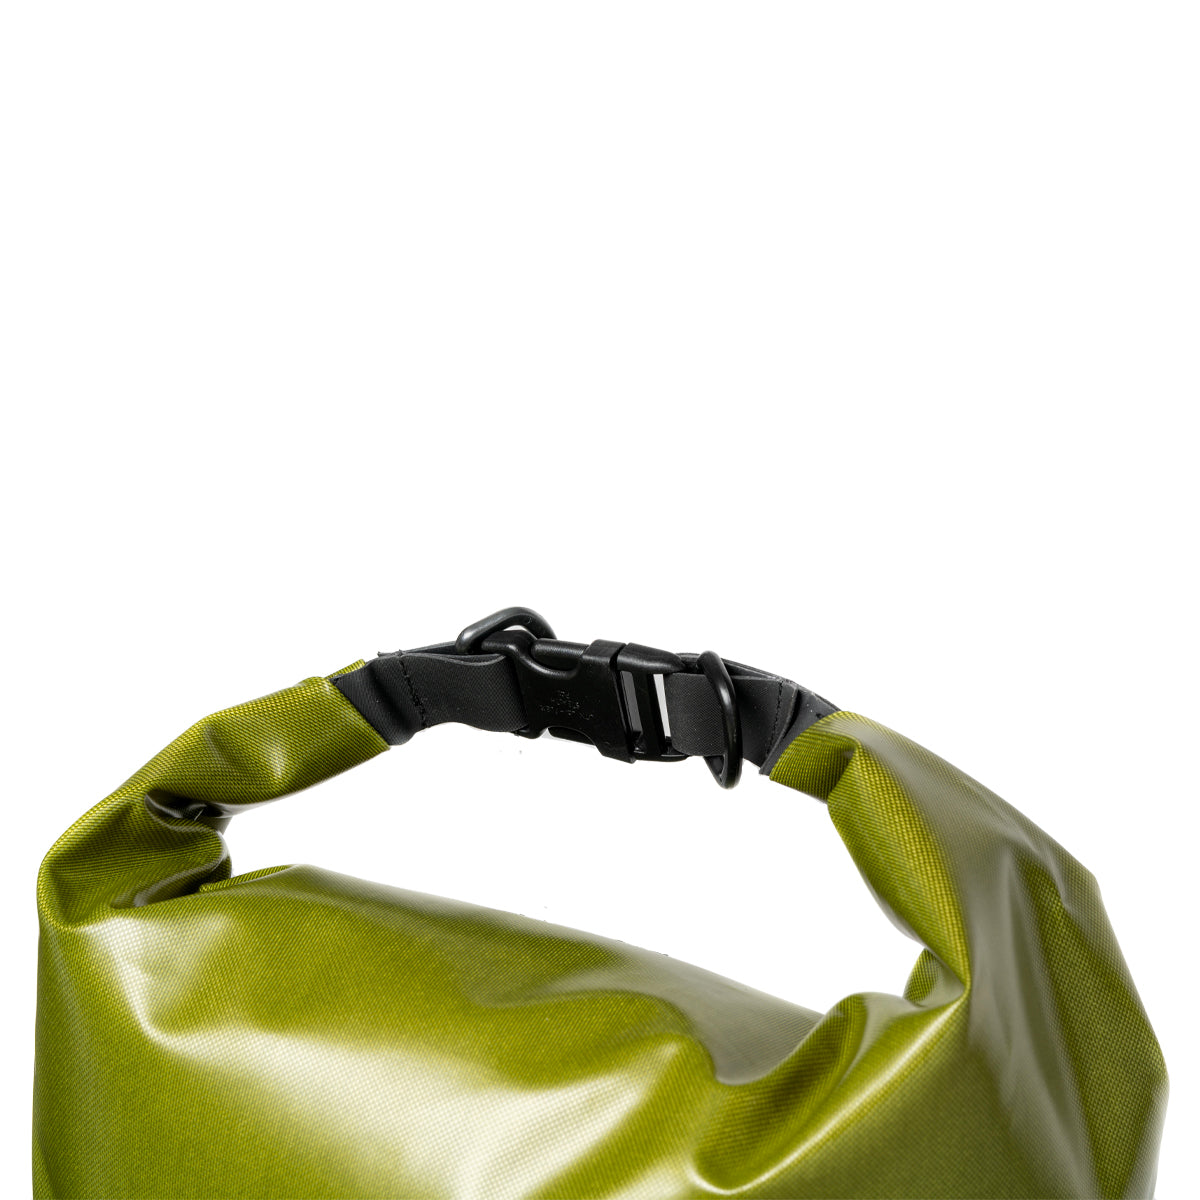 Koyukon Extreme Roll Top Dry Bag